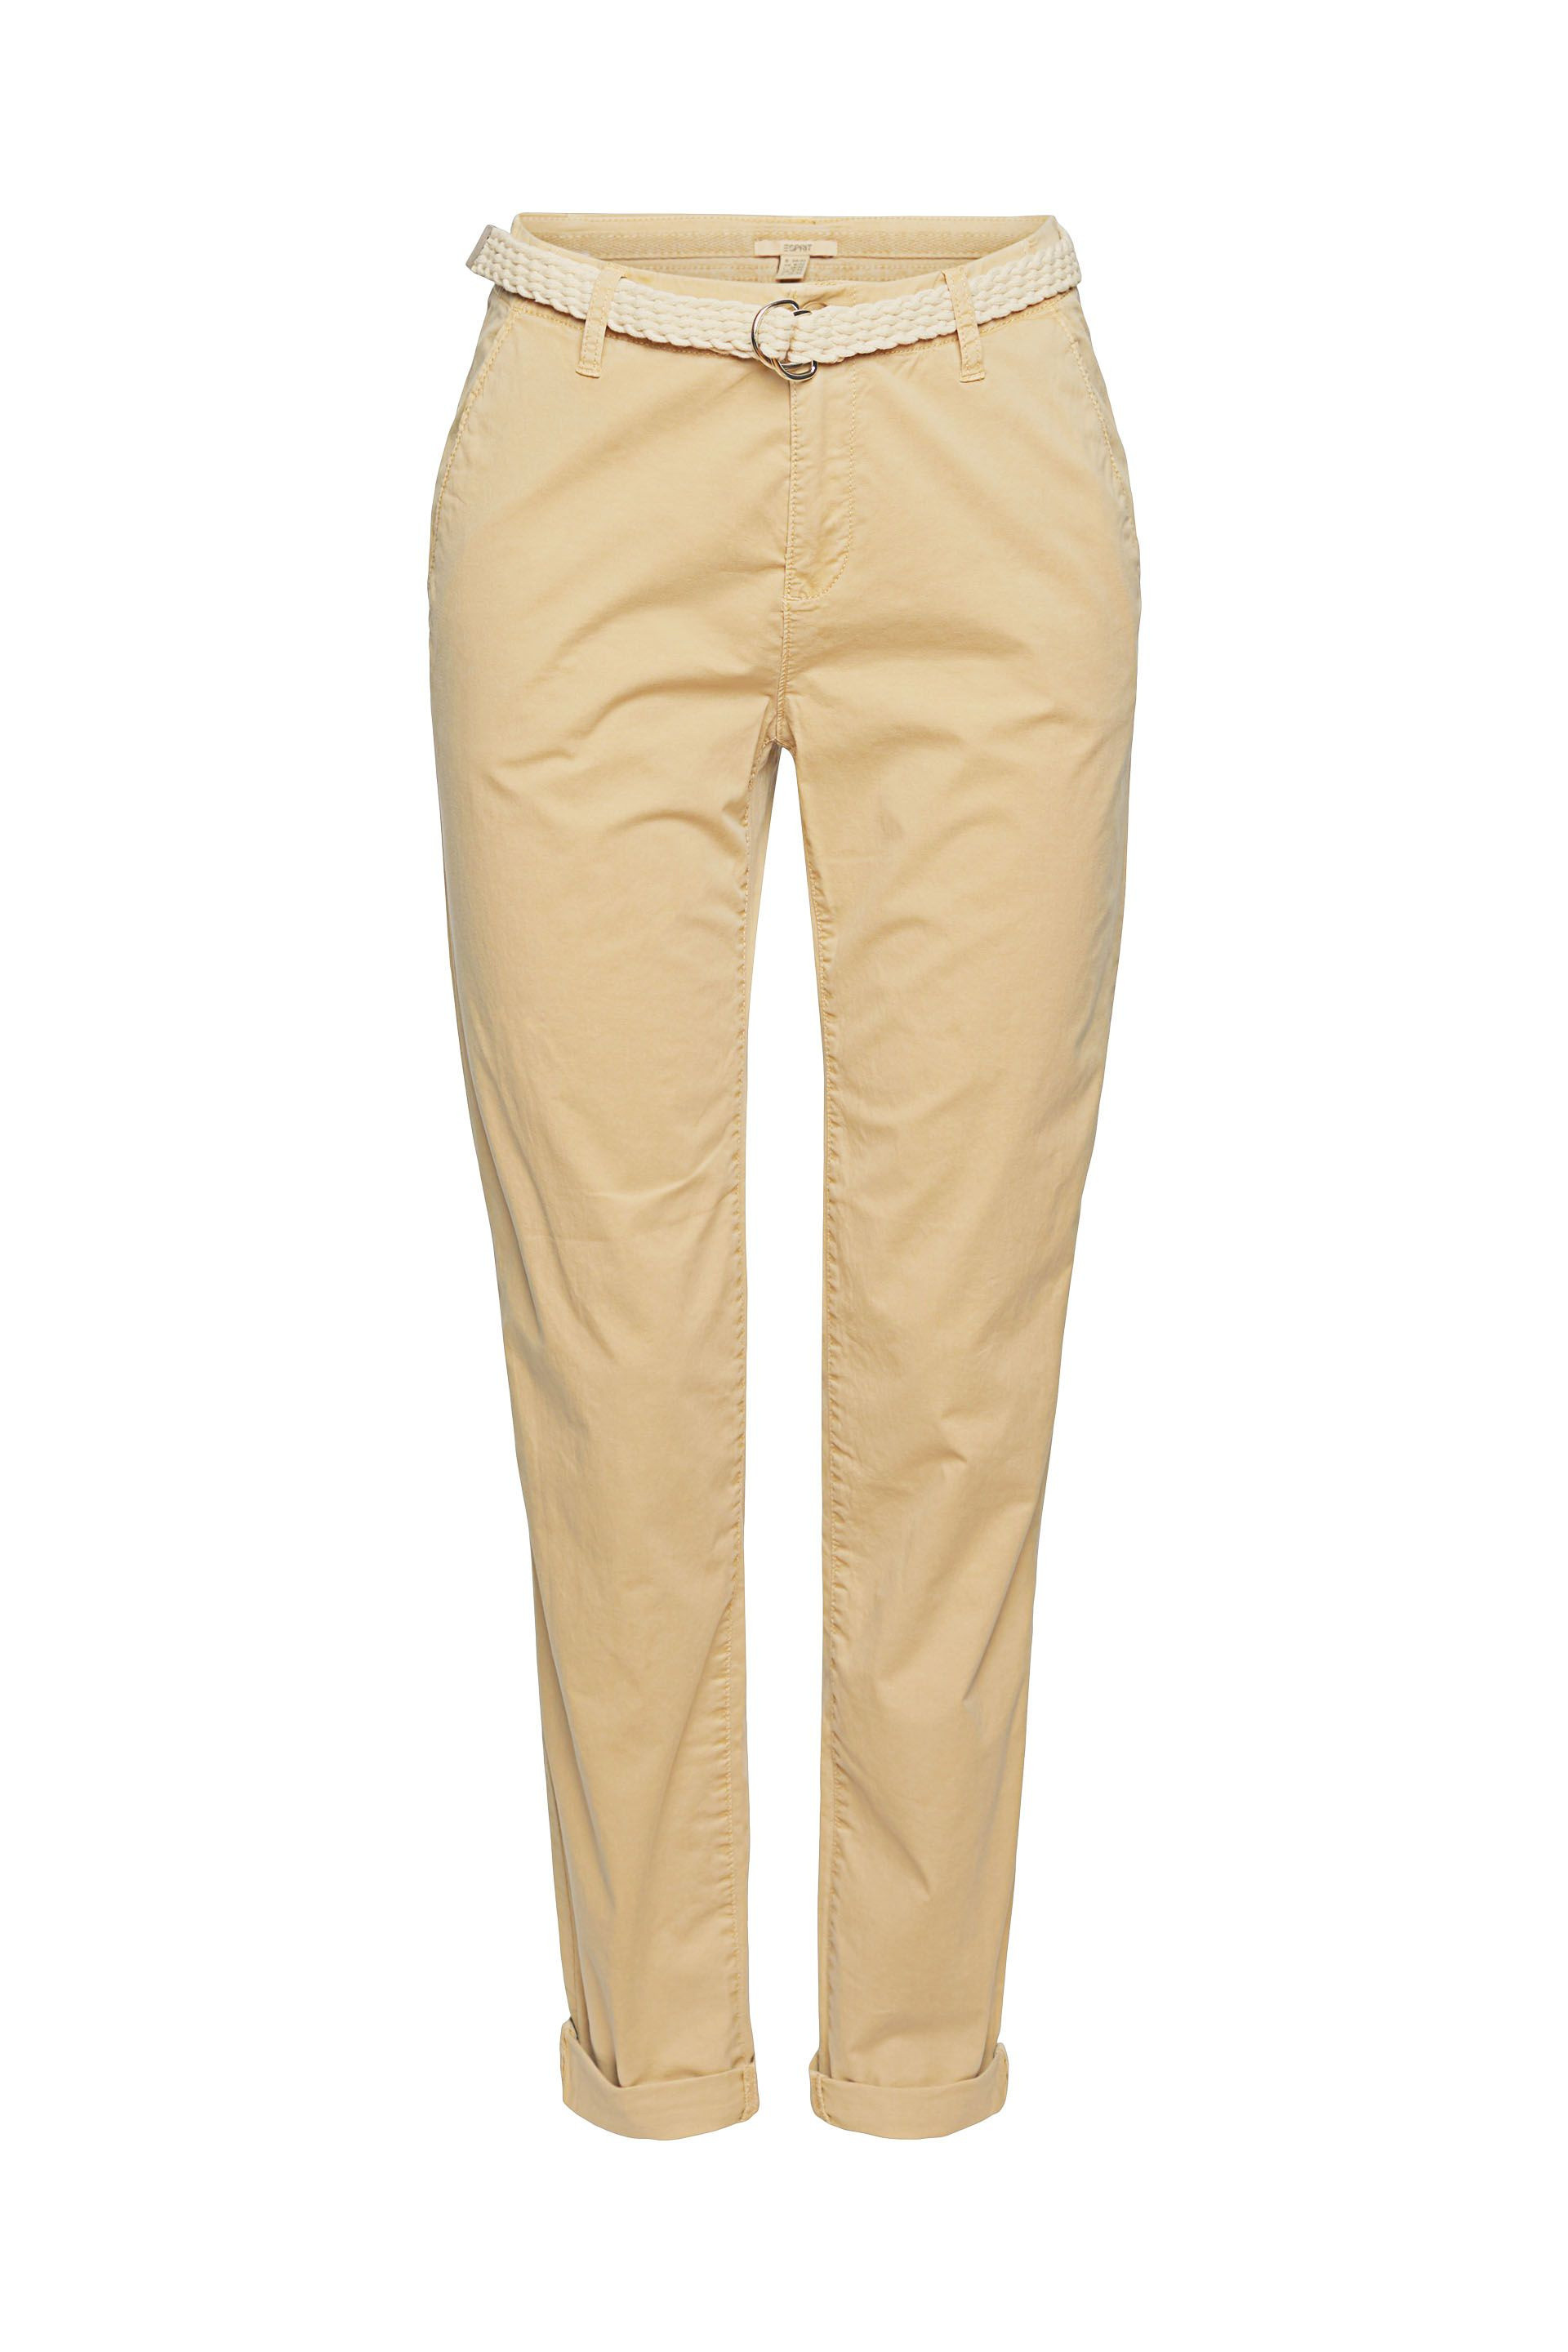 Pantaloni chino con cintura intrecciata, Beige, large image number 0